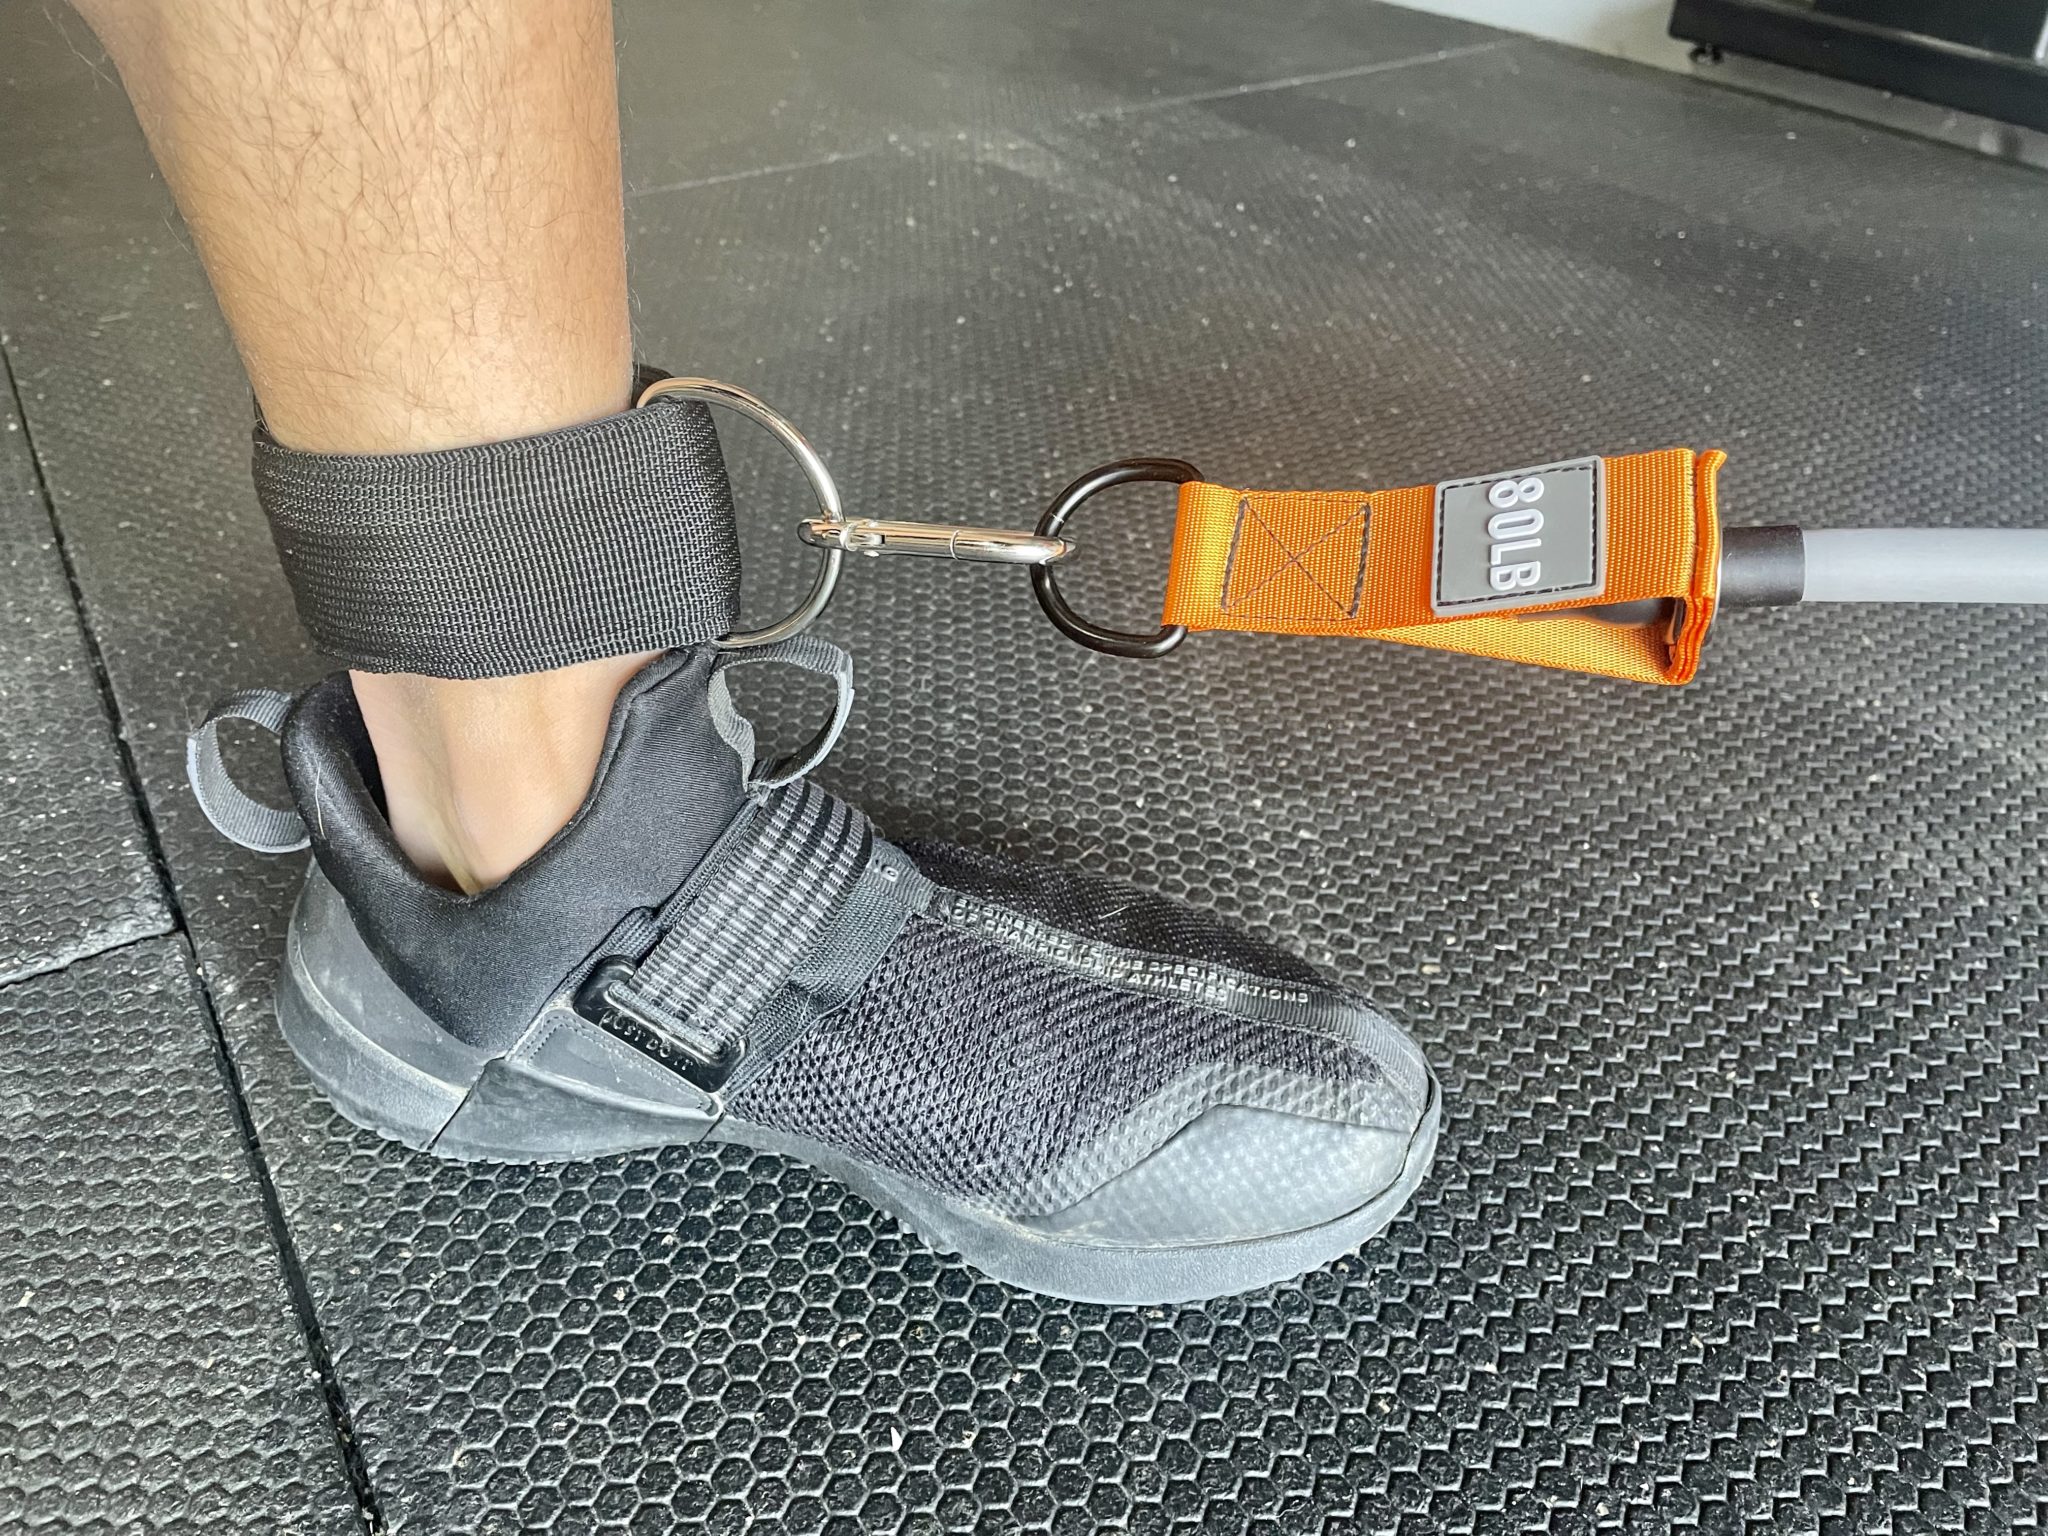 torroband ankle straps